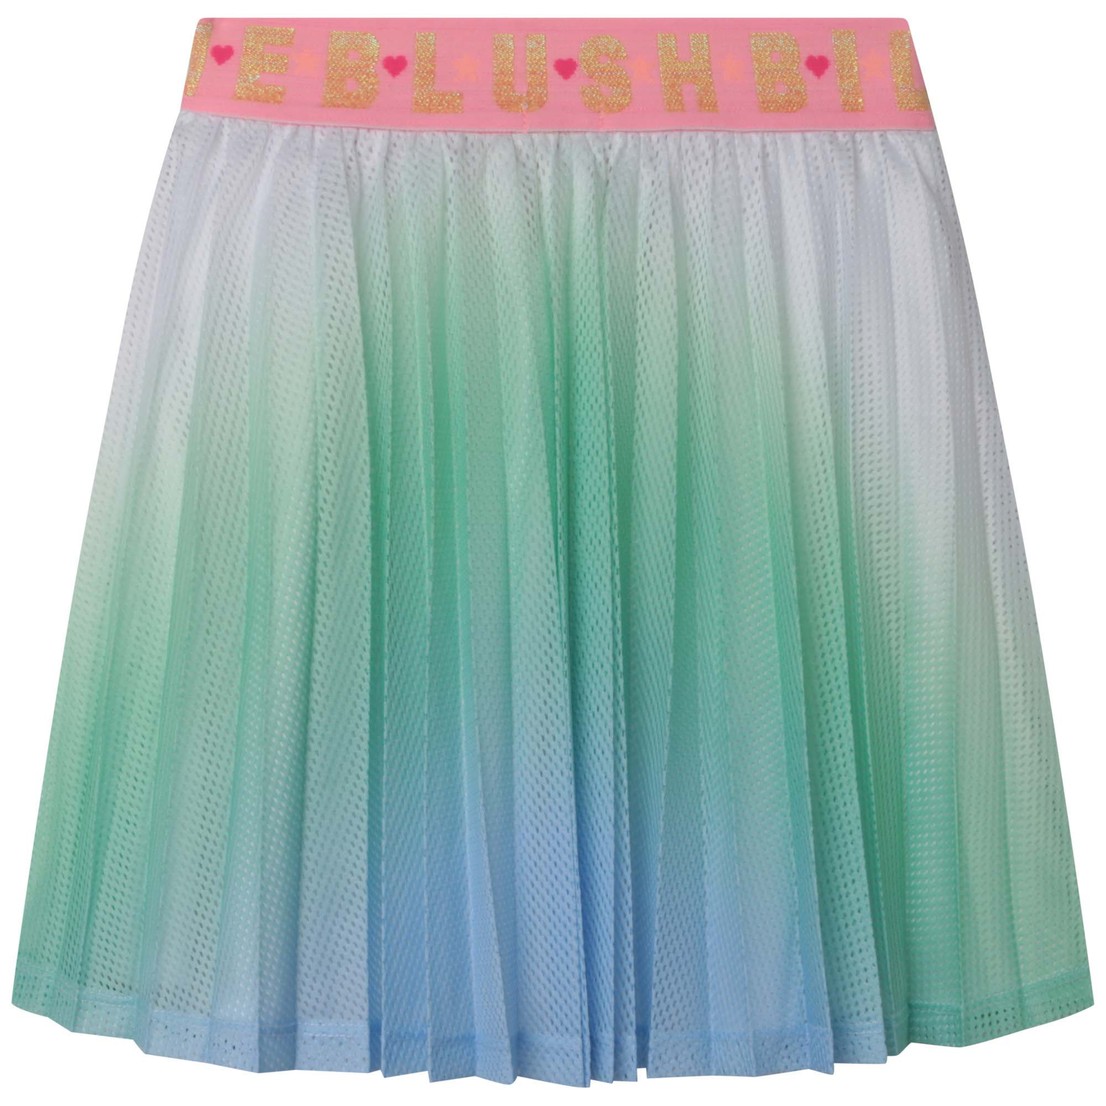 Mesh net gradient pleated skirt, viscose lining, \